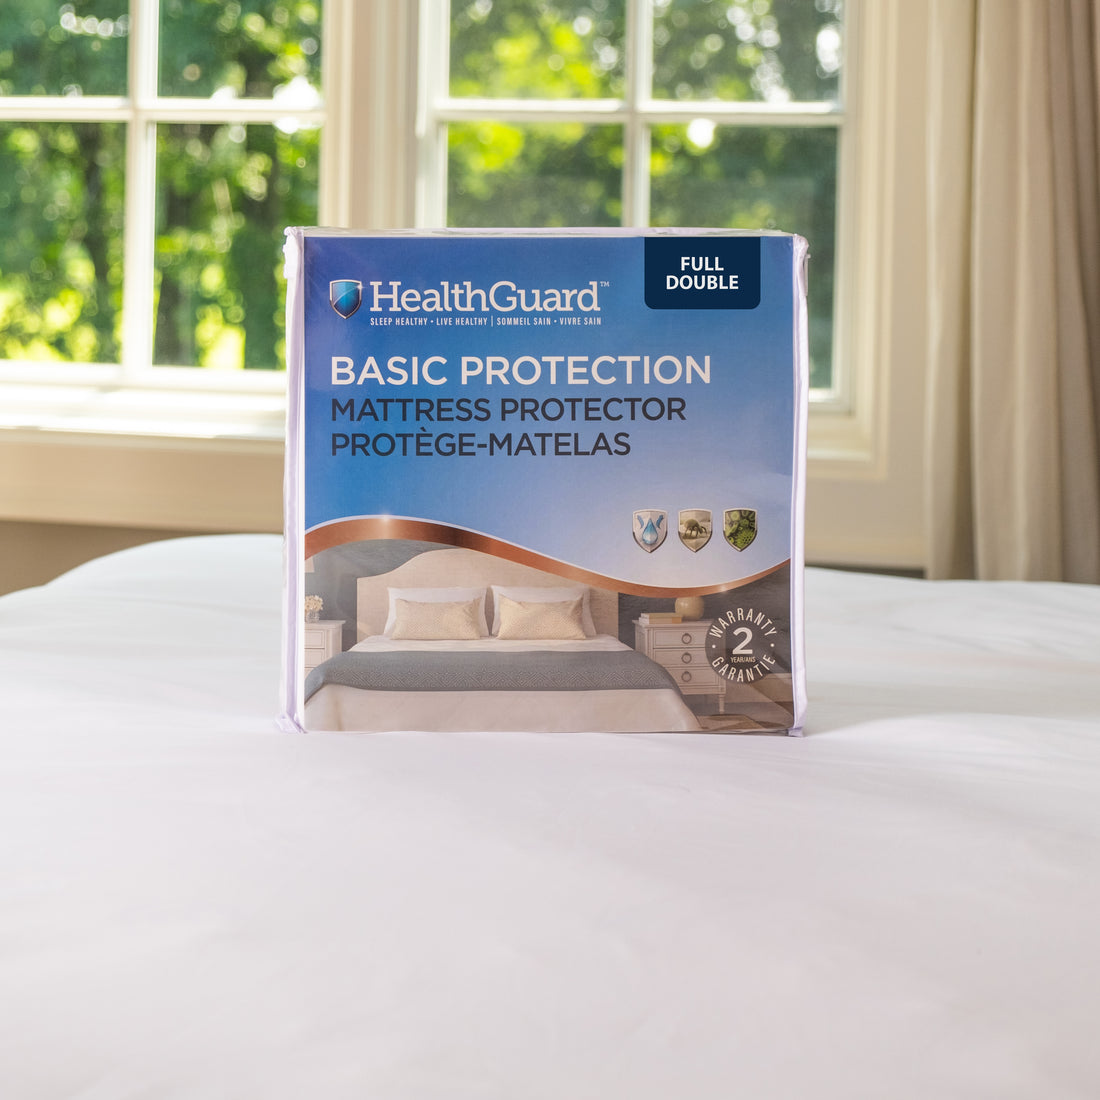 Health Guard Basic Protection Mattress Protector